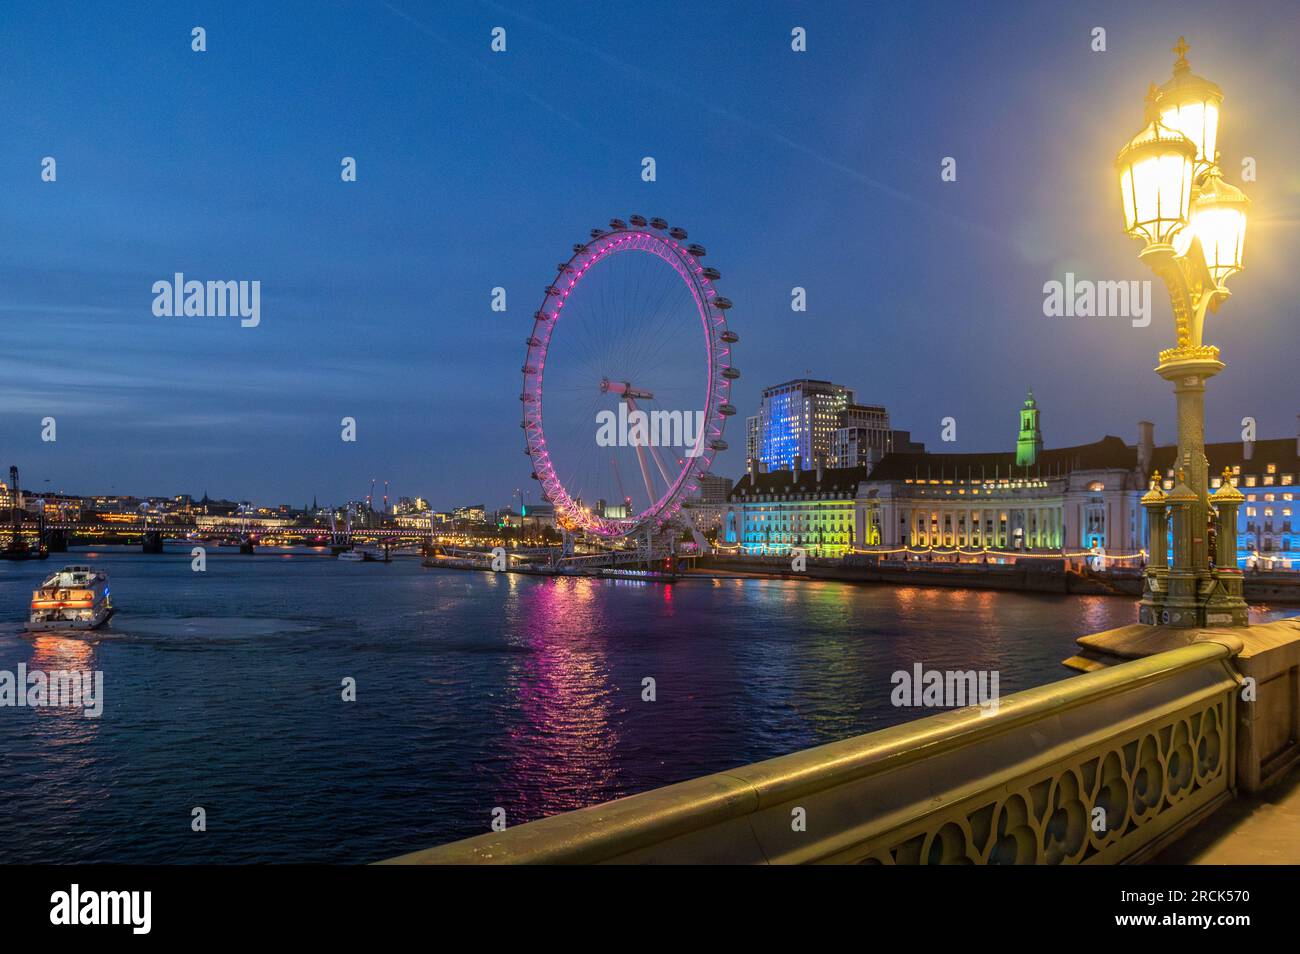 London Eye (Millennium Wheel), London, UK Stock Photo